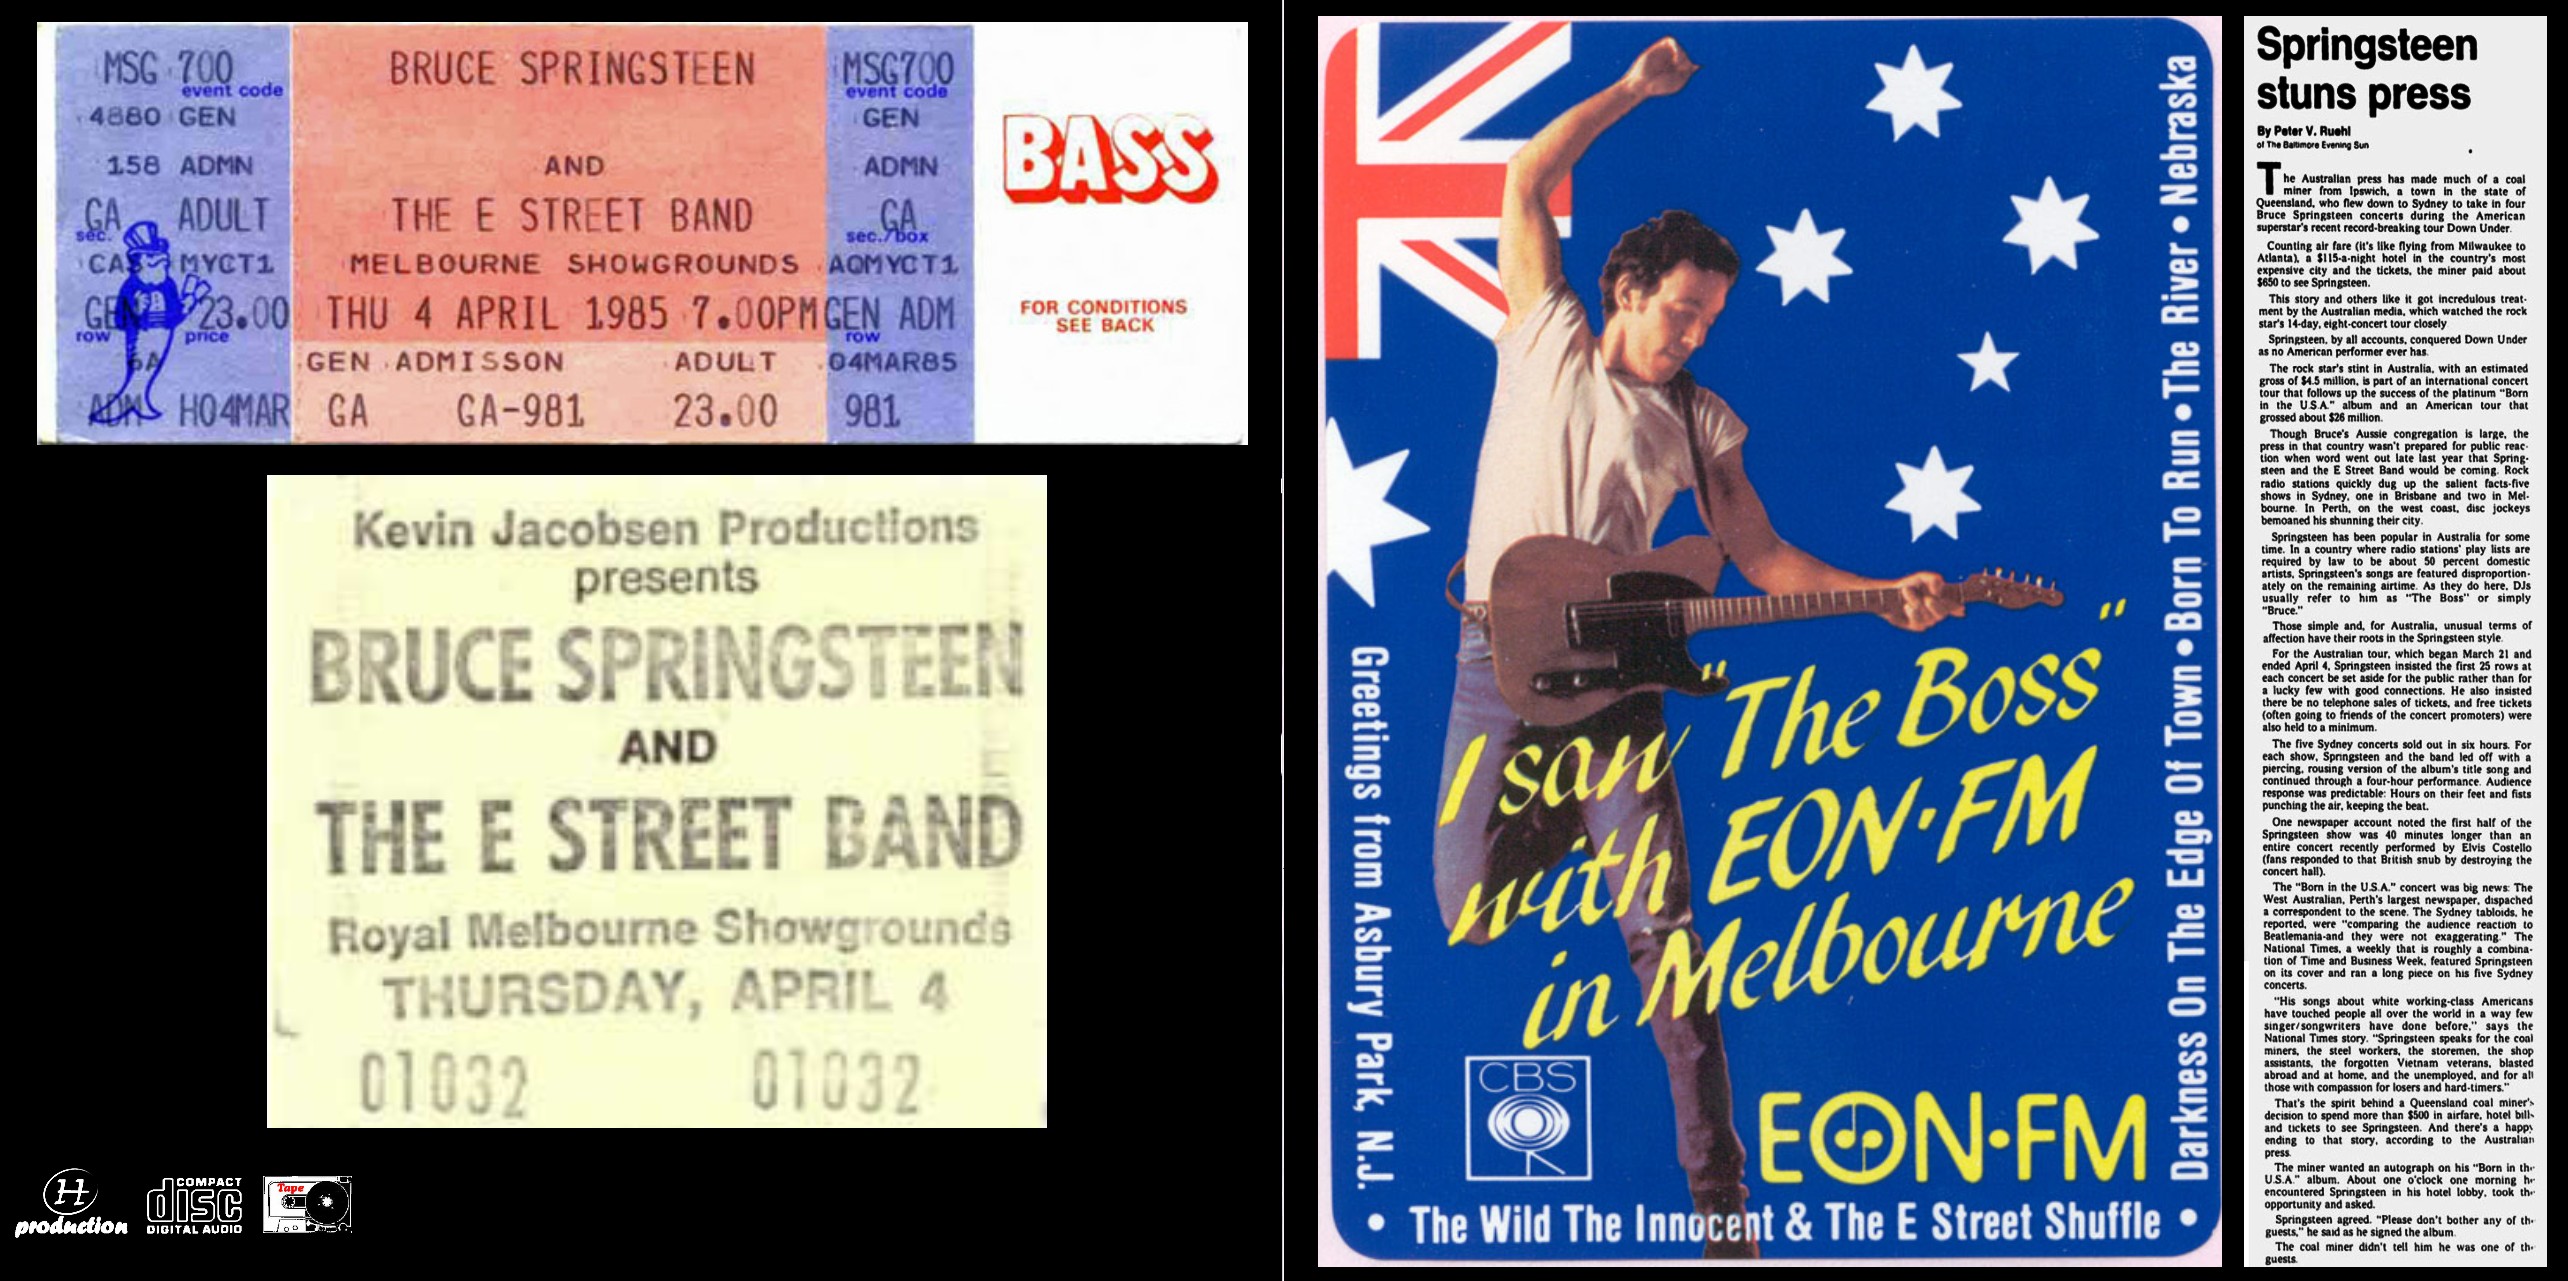 BruceSpringsteenAndTheEStreetBand1985-04-04ShowgroundsMelbourneAustralia (1).jpg